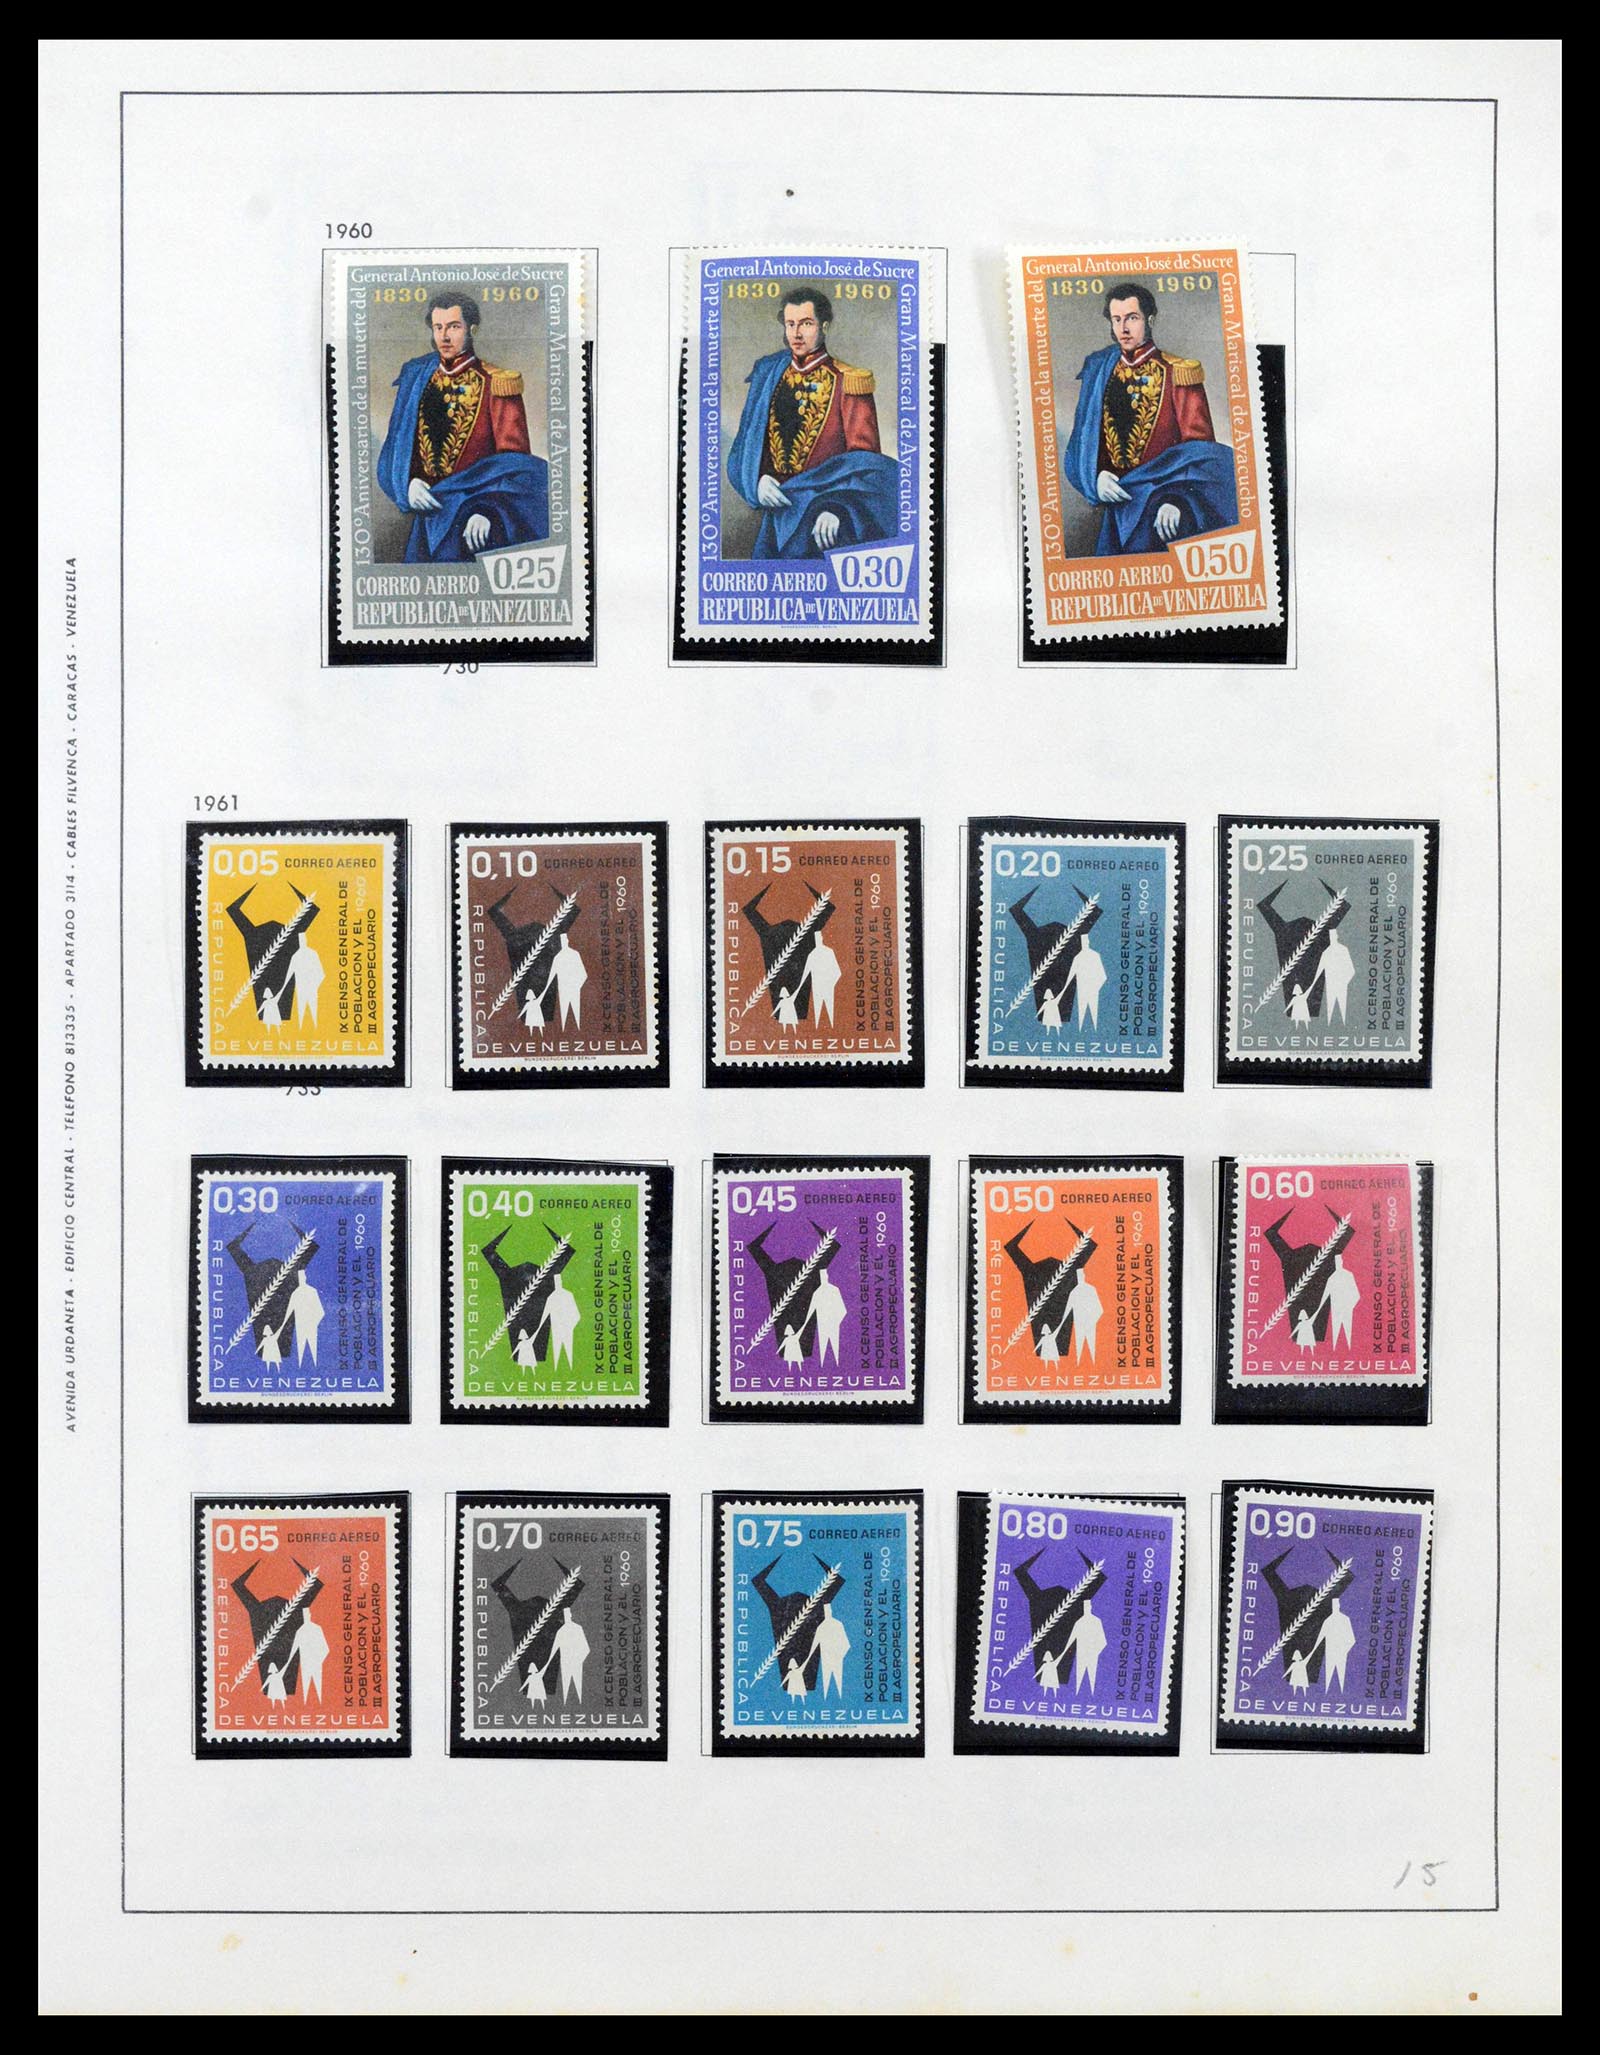 39436 0047 - Stamp collection 39436 Venezuela 1859-1985.